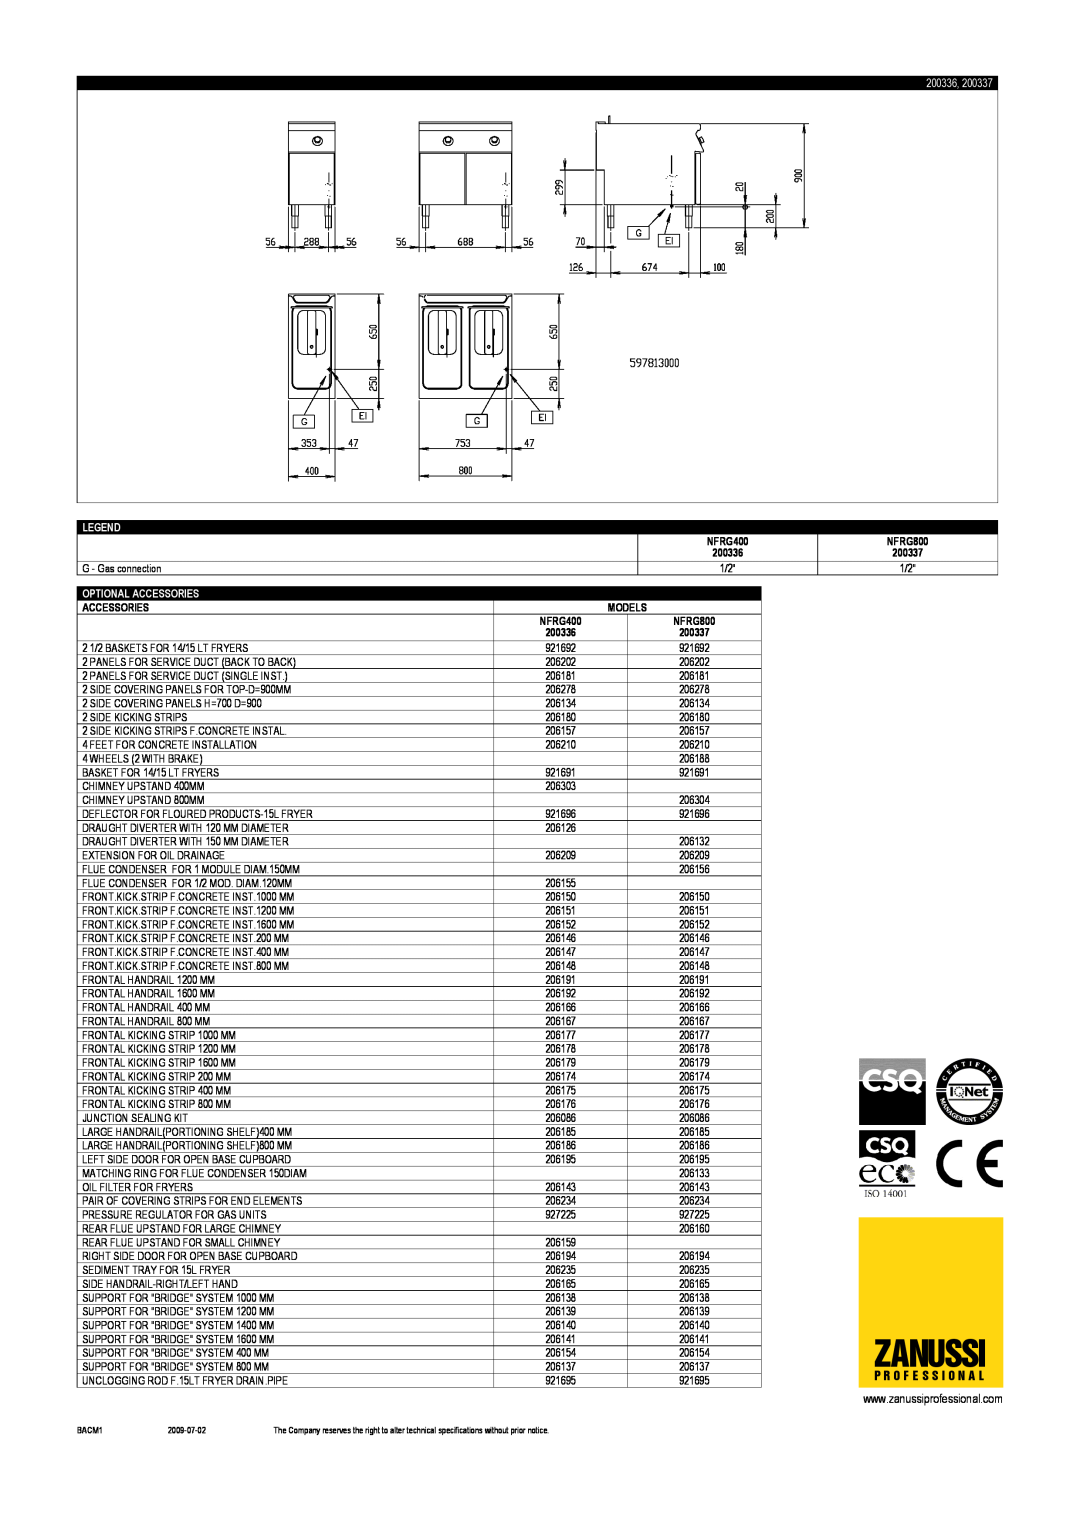 Zanussi 200336, NFRG800, 200337 dimensions Zanussi, NFRG400, Optional Accessories, Models 